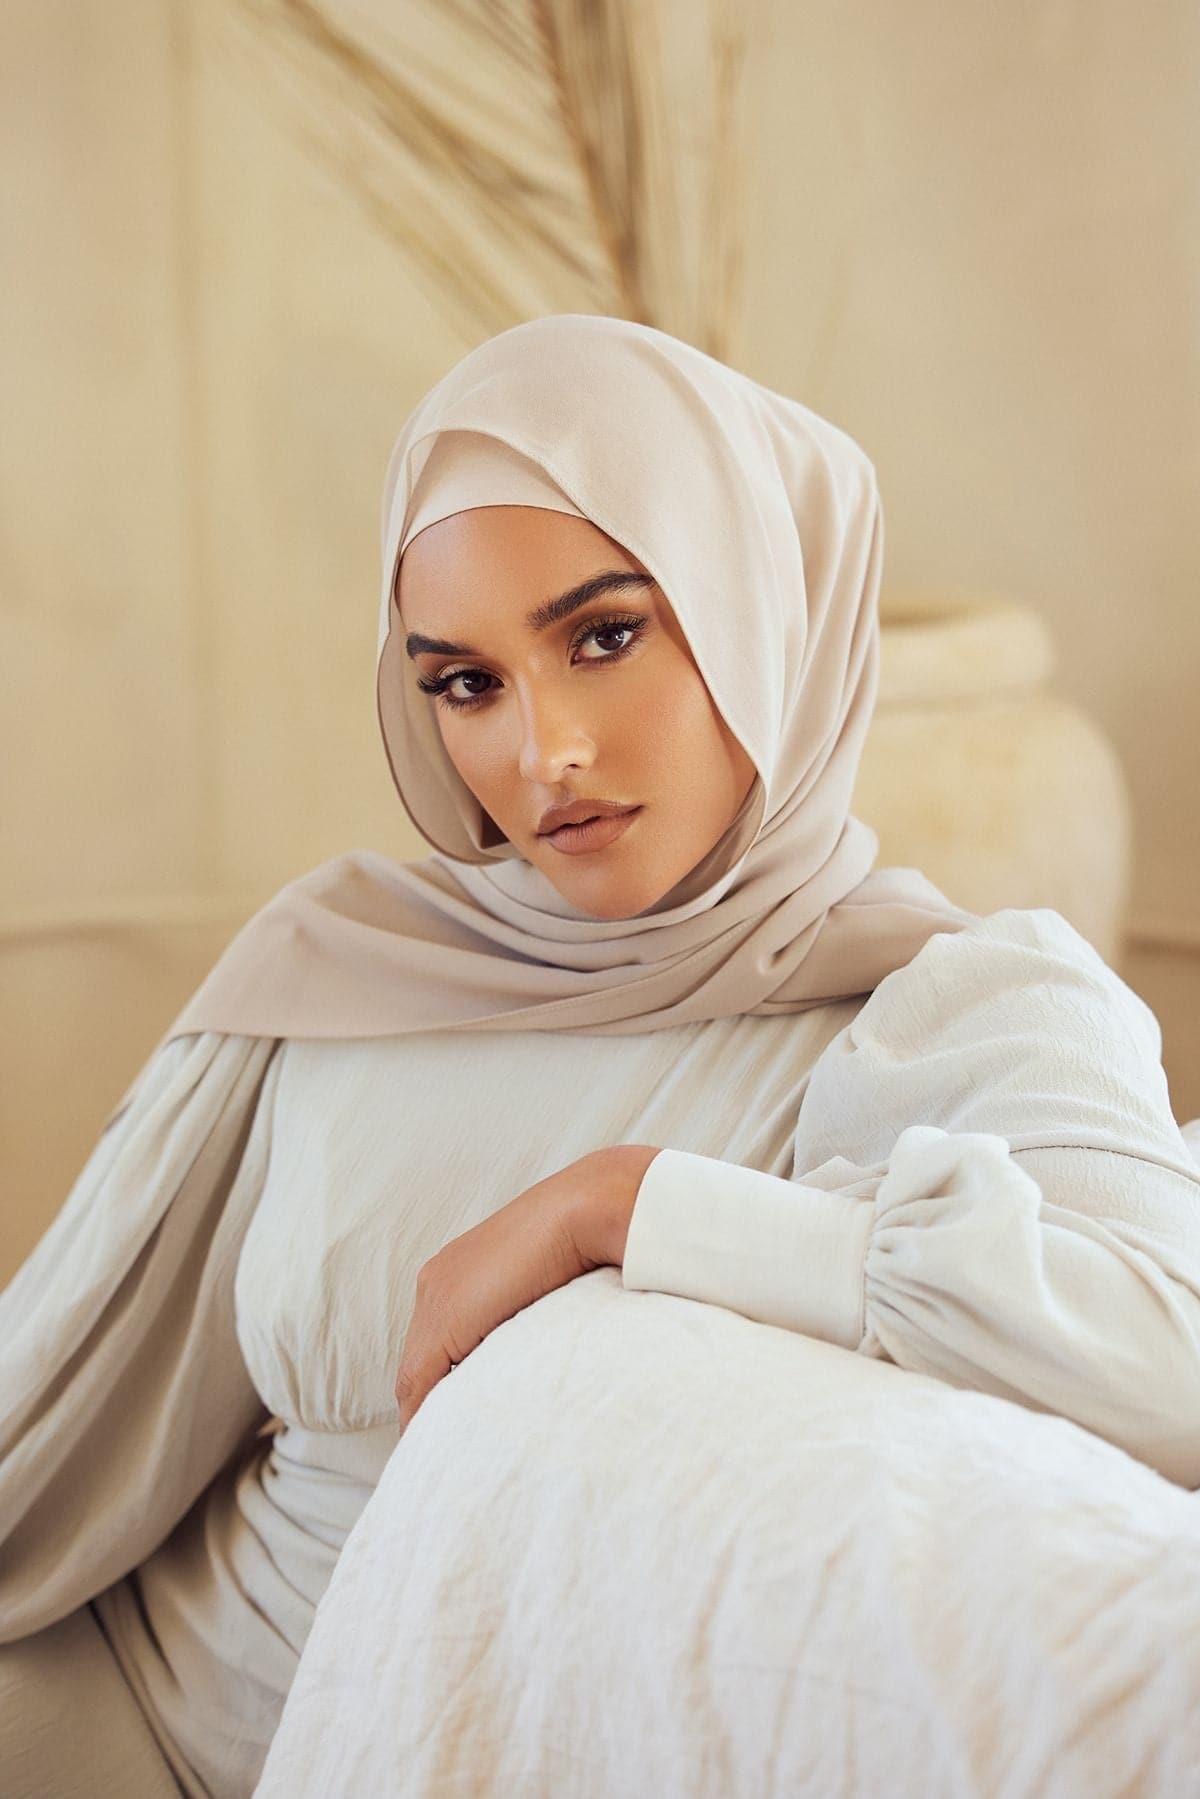 Muslim Hijab Pins Color Black and White Safety Pins Ladies Hair